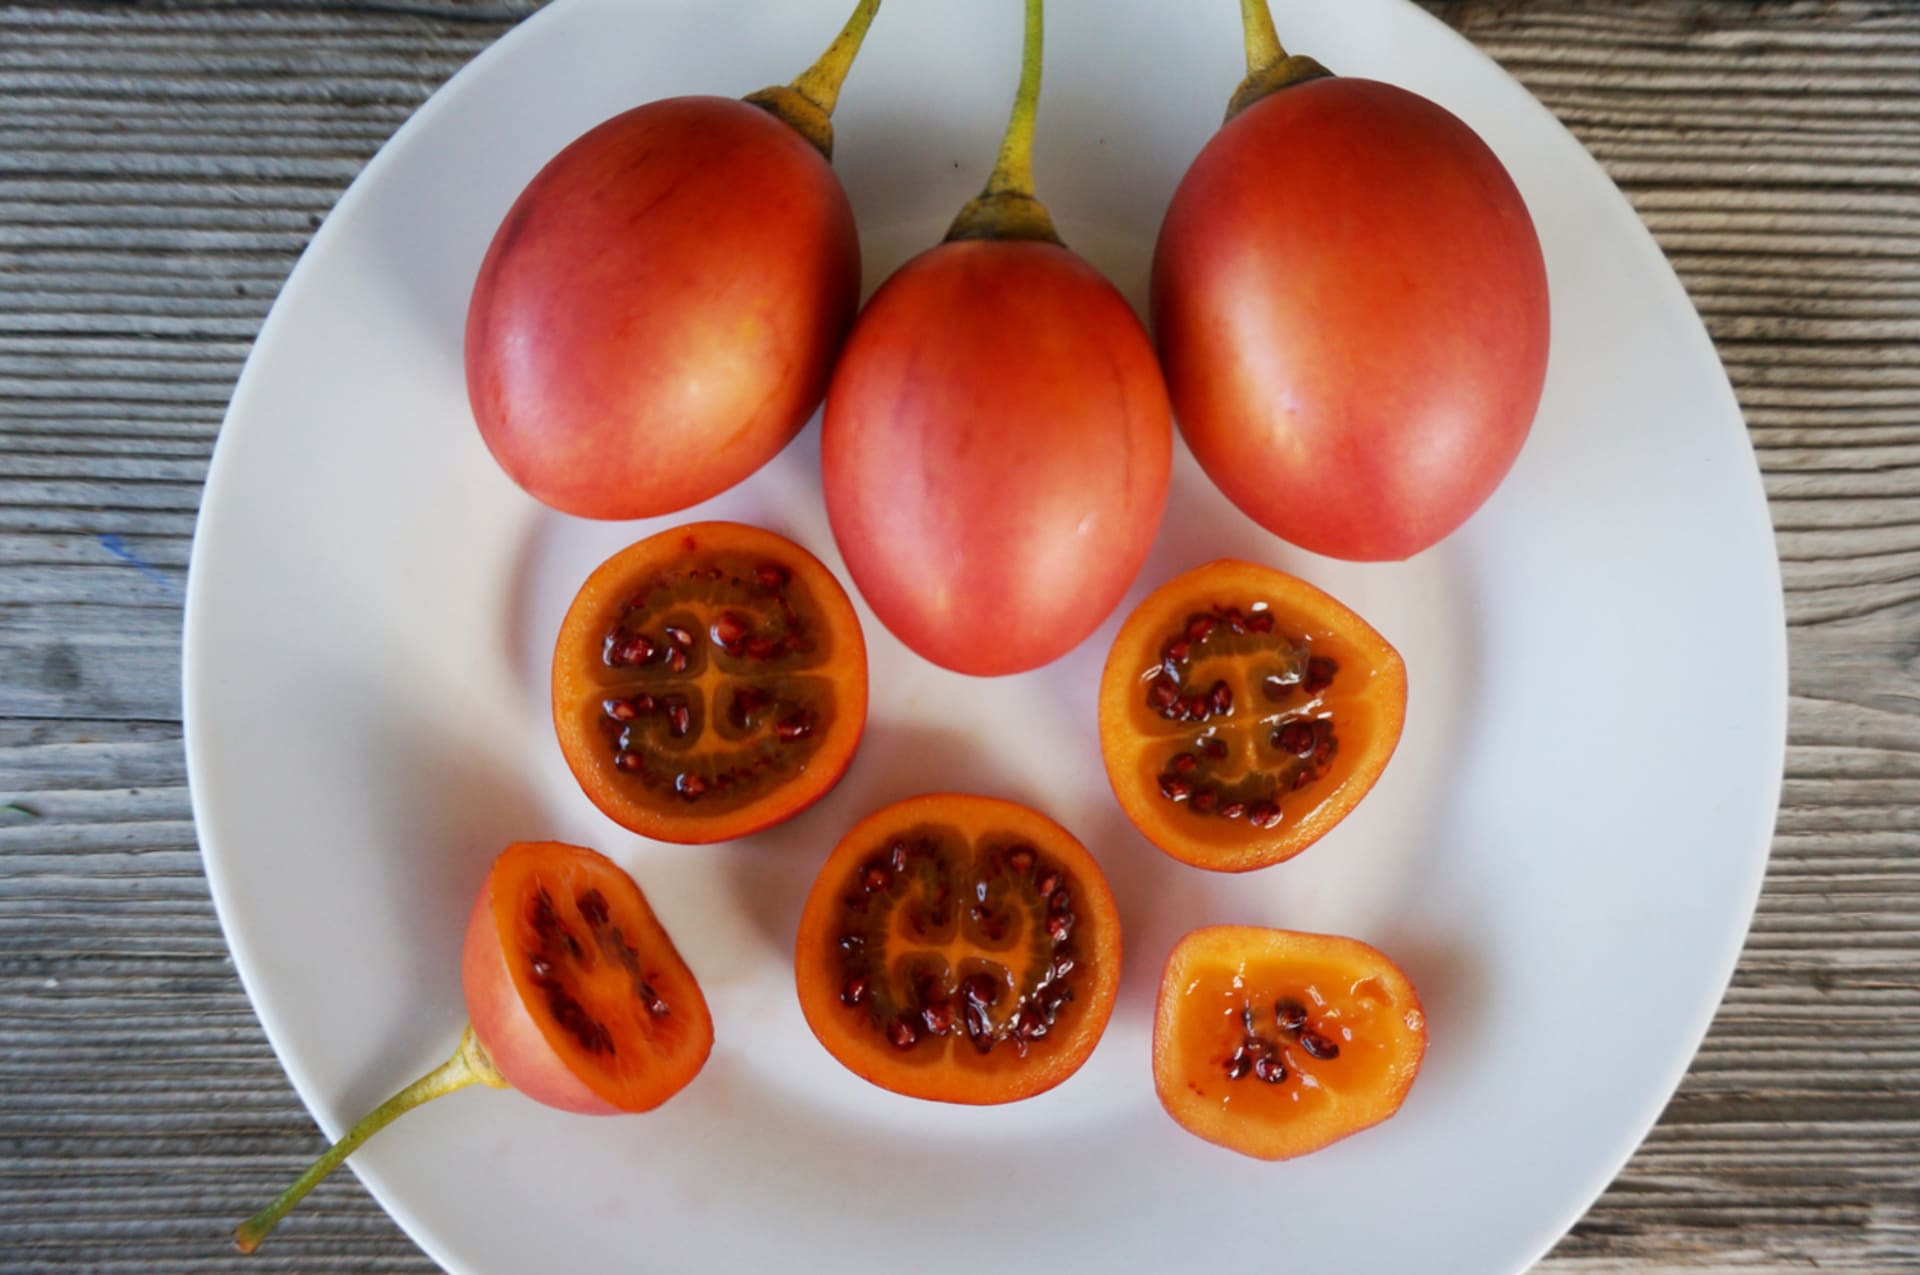 Lilek rajčenka, rajčenka řepovitá, tamarillo, stromové rajče (Silanum betaceum)